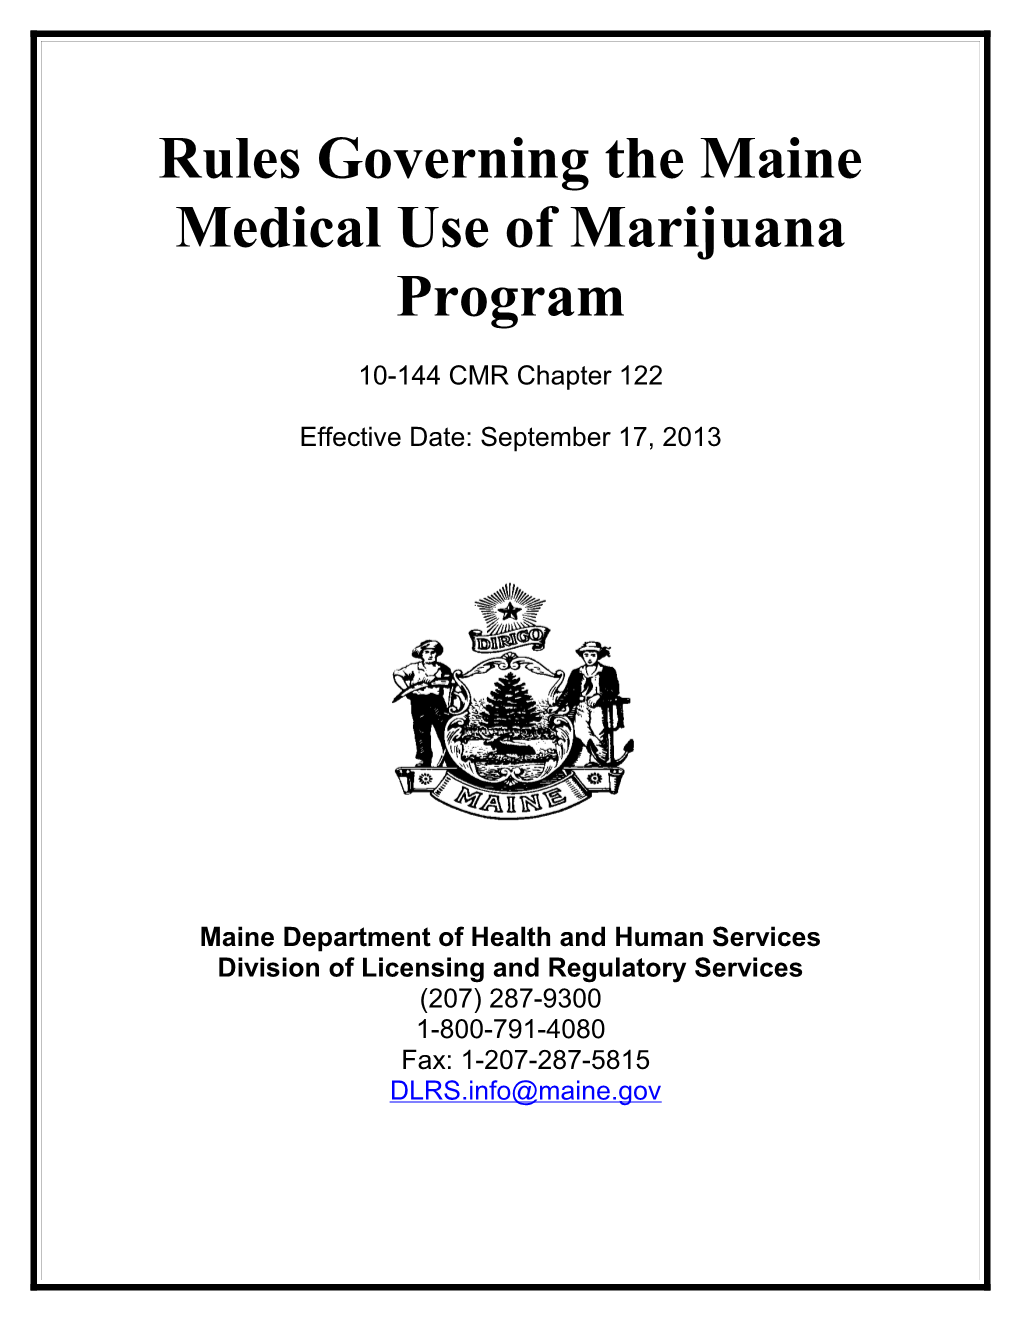 Maine Medical Marijuana Program Rules